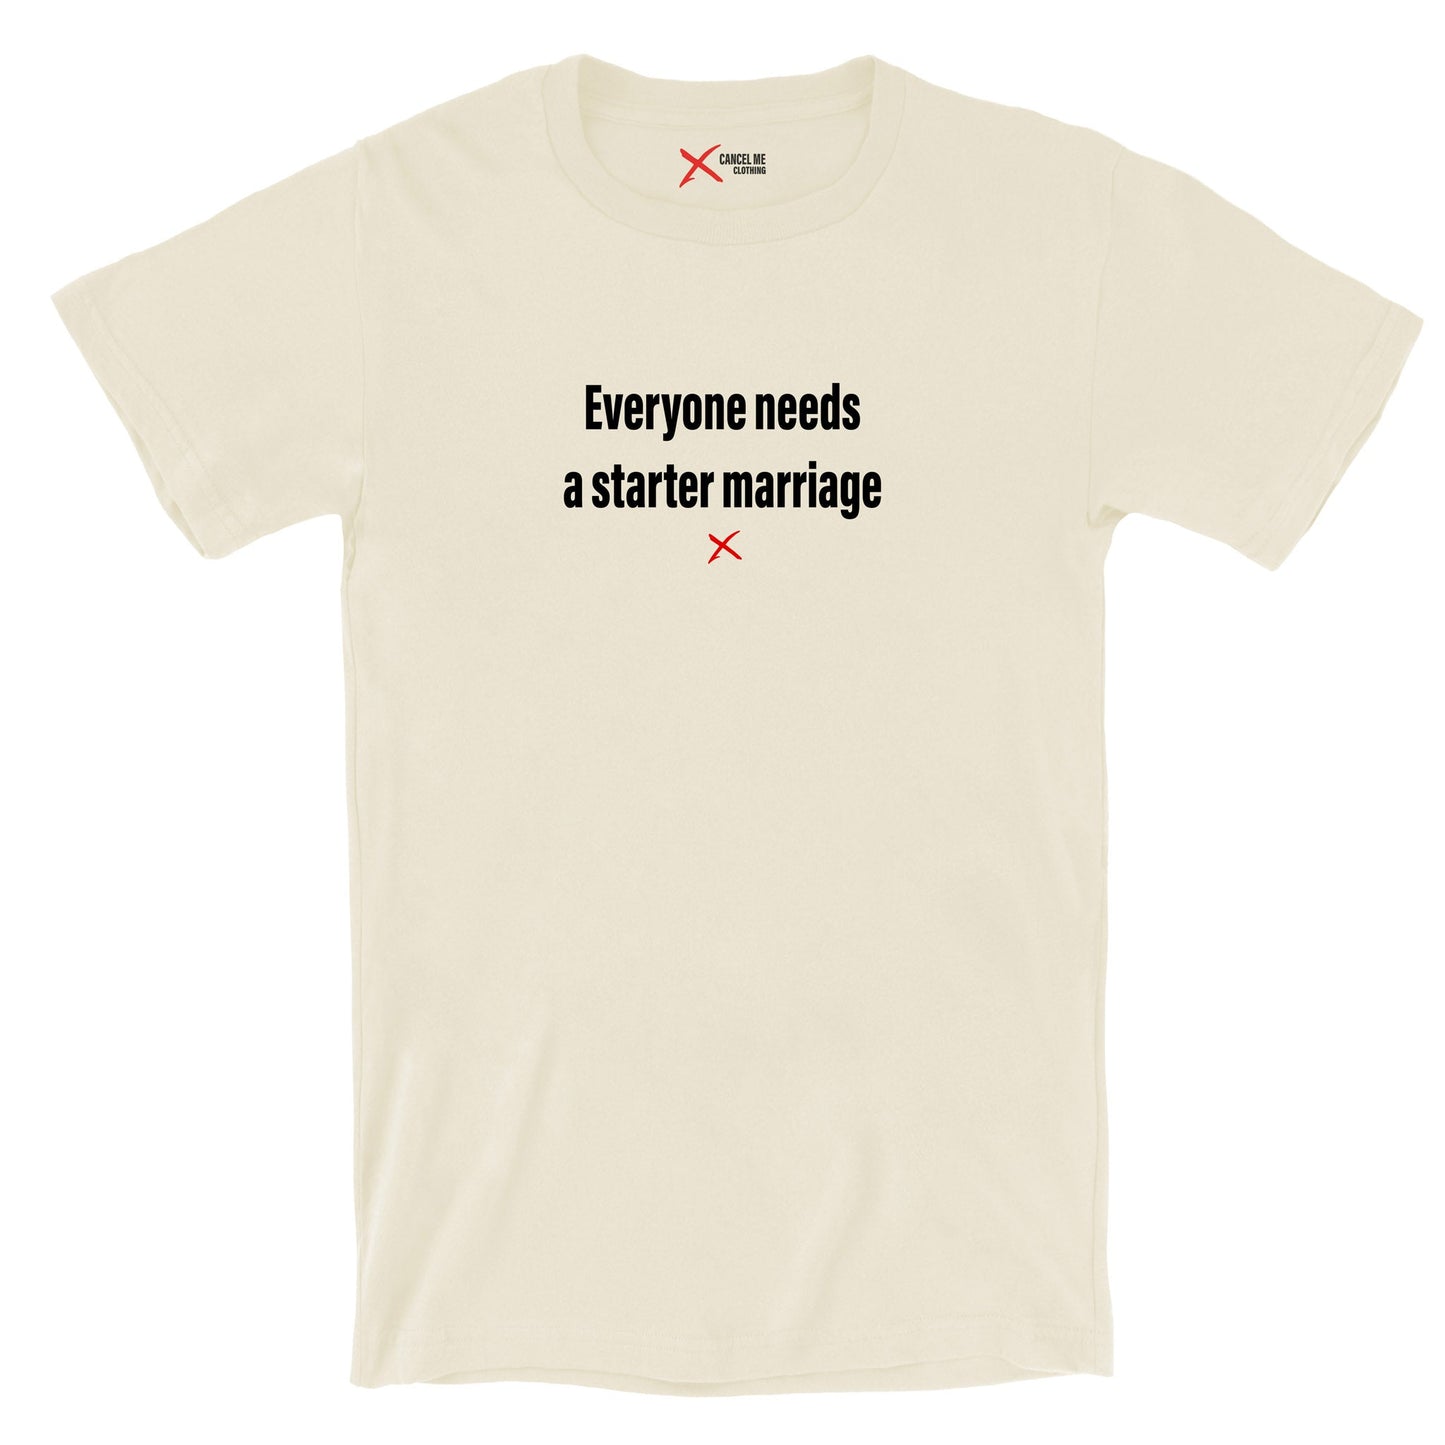 Everyone needs a starter marriage - Shirt